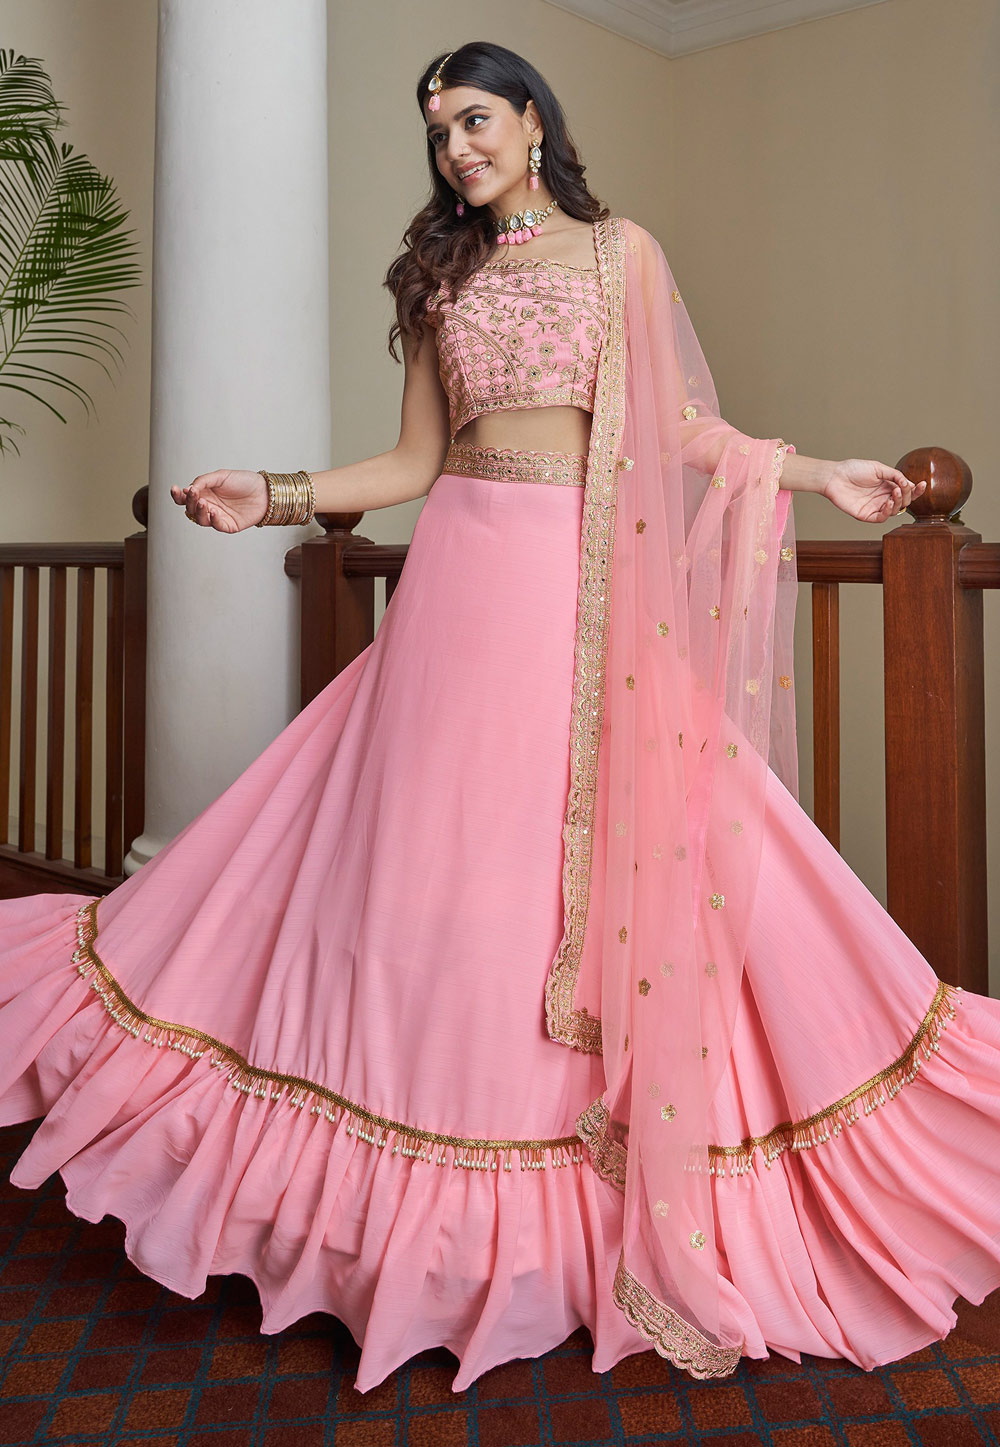 Georgette Wedding Baby Pink Crush Pattern Lehenga Choli at Rs 1500 in Surat